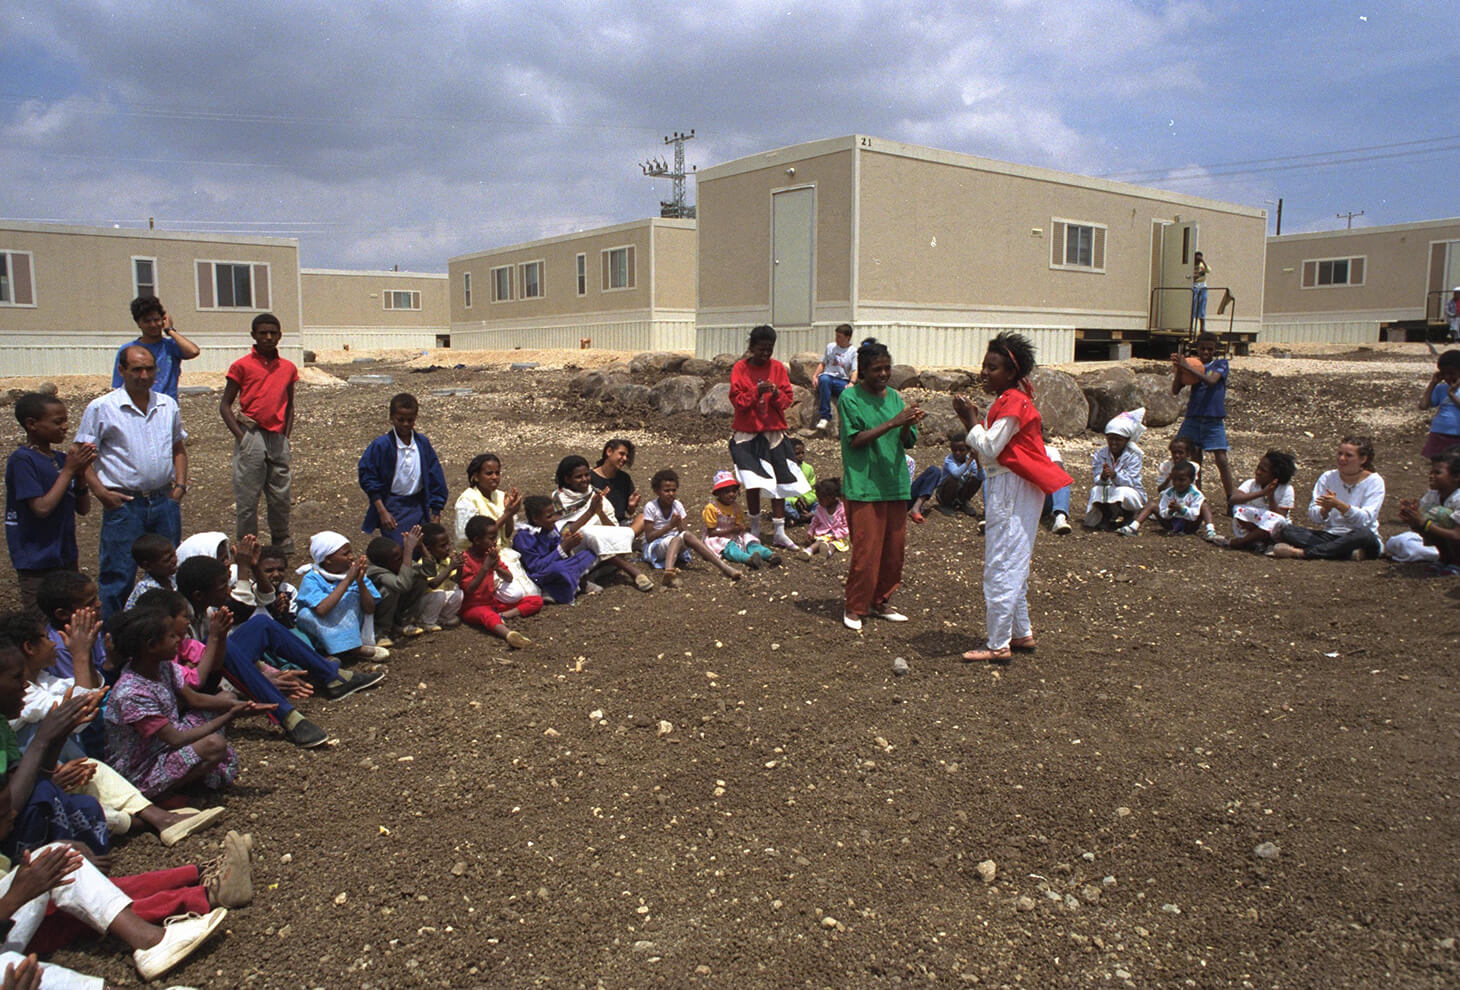 SINGING AND DANCING AT KFAR TABOR MOBILE HOMESITE,WITH CHILDREN FROM NEARBY MOSHAVIM, OPERATION SOLOMON, ETHIOPIAN IMMIGRANTS. Photo: Doron Horowitz GPO